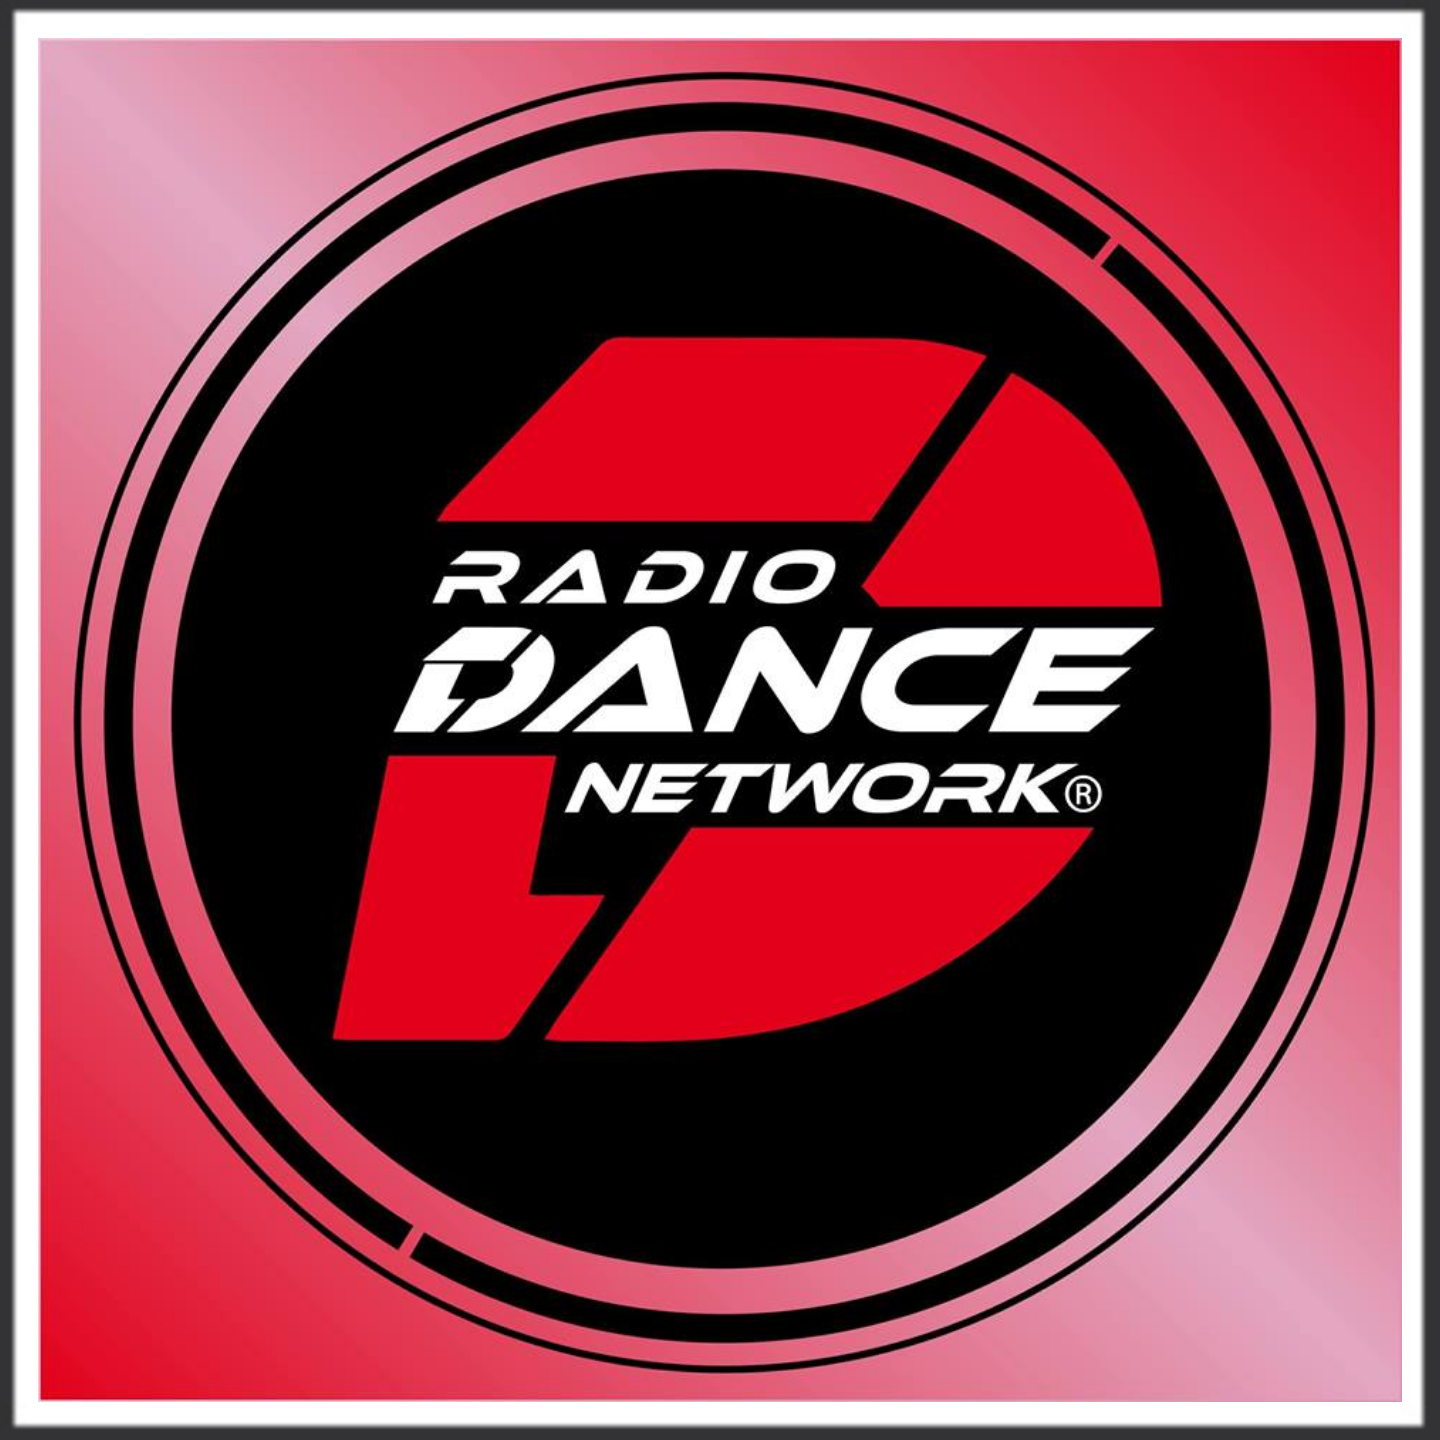 RADIO DANCE NETWORK